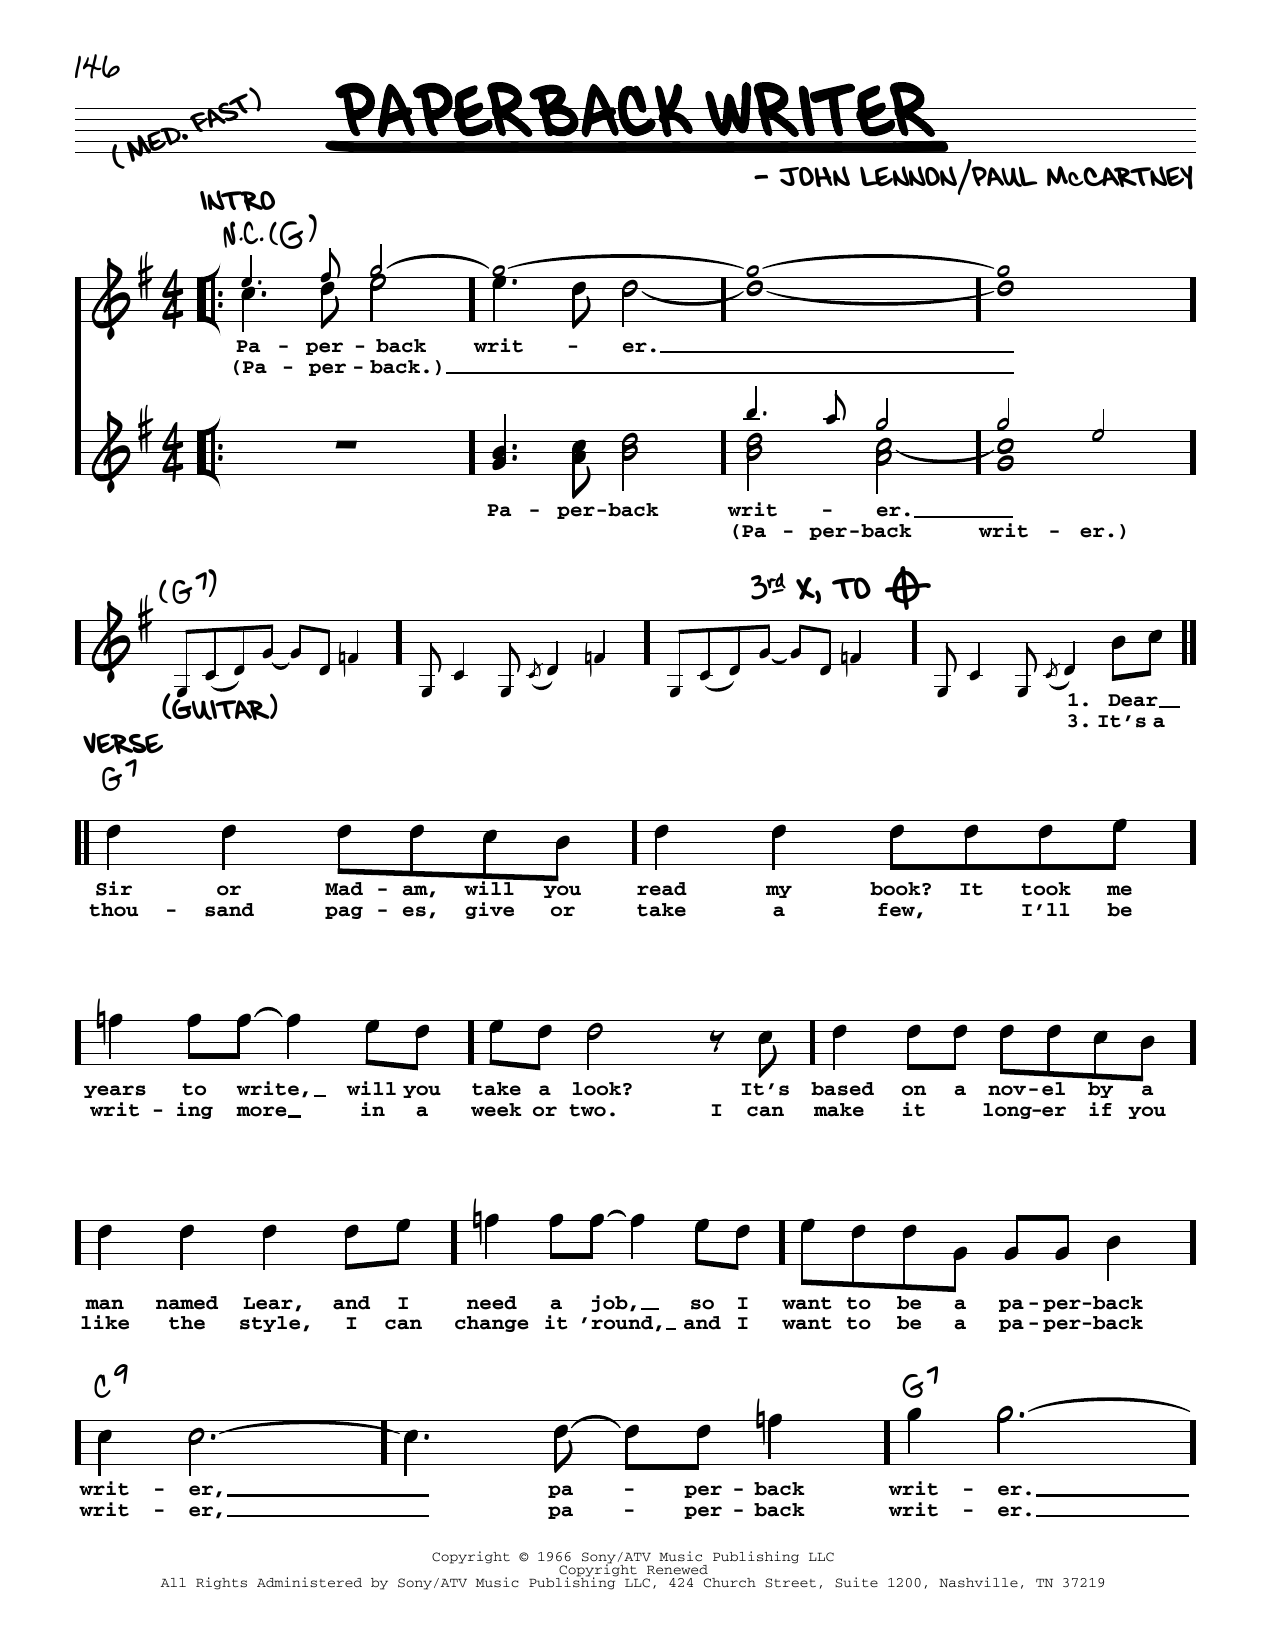 The Beatles Paperback Writer [Jazz version] Sheet Music Notes & Chords for Real Book – Melody, Lyrics & Chords - Download or Print PDF